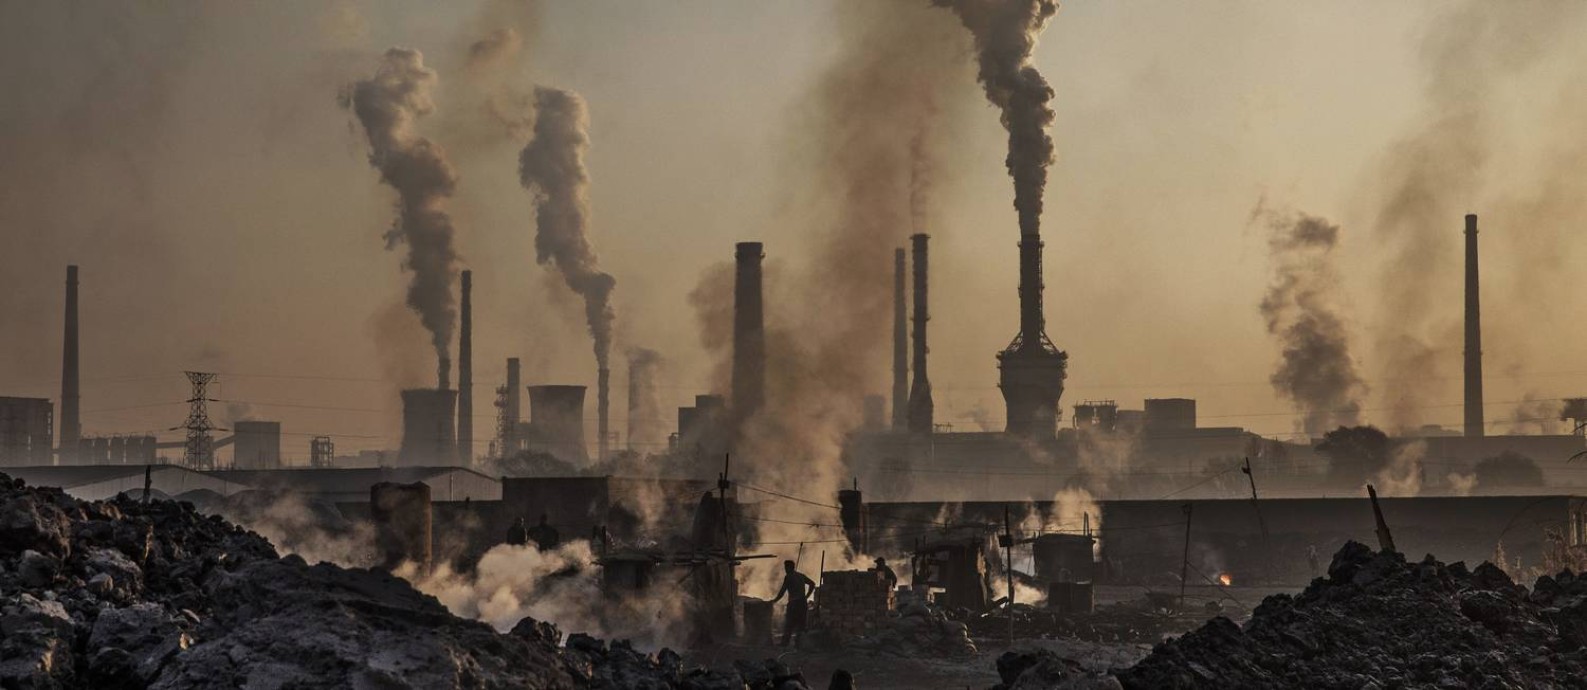 Fábrica na China joga poluentes na atmosfera Foto: Kevin Frayer / Getty Images